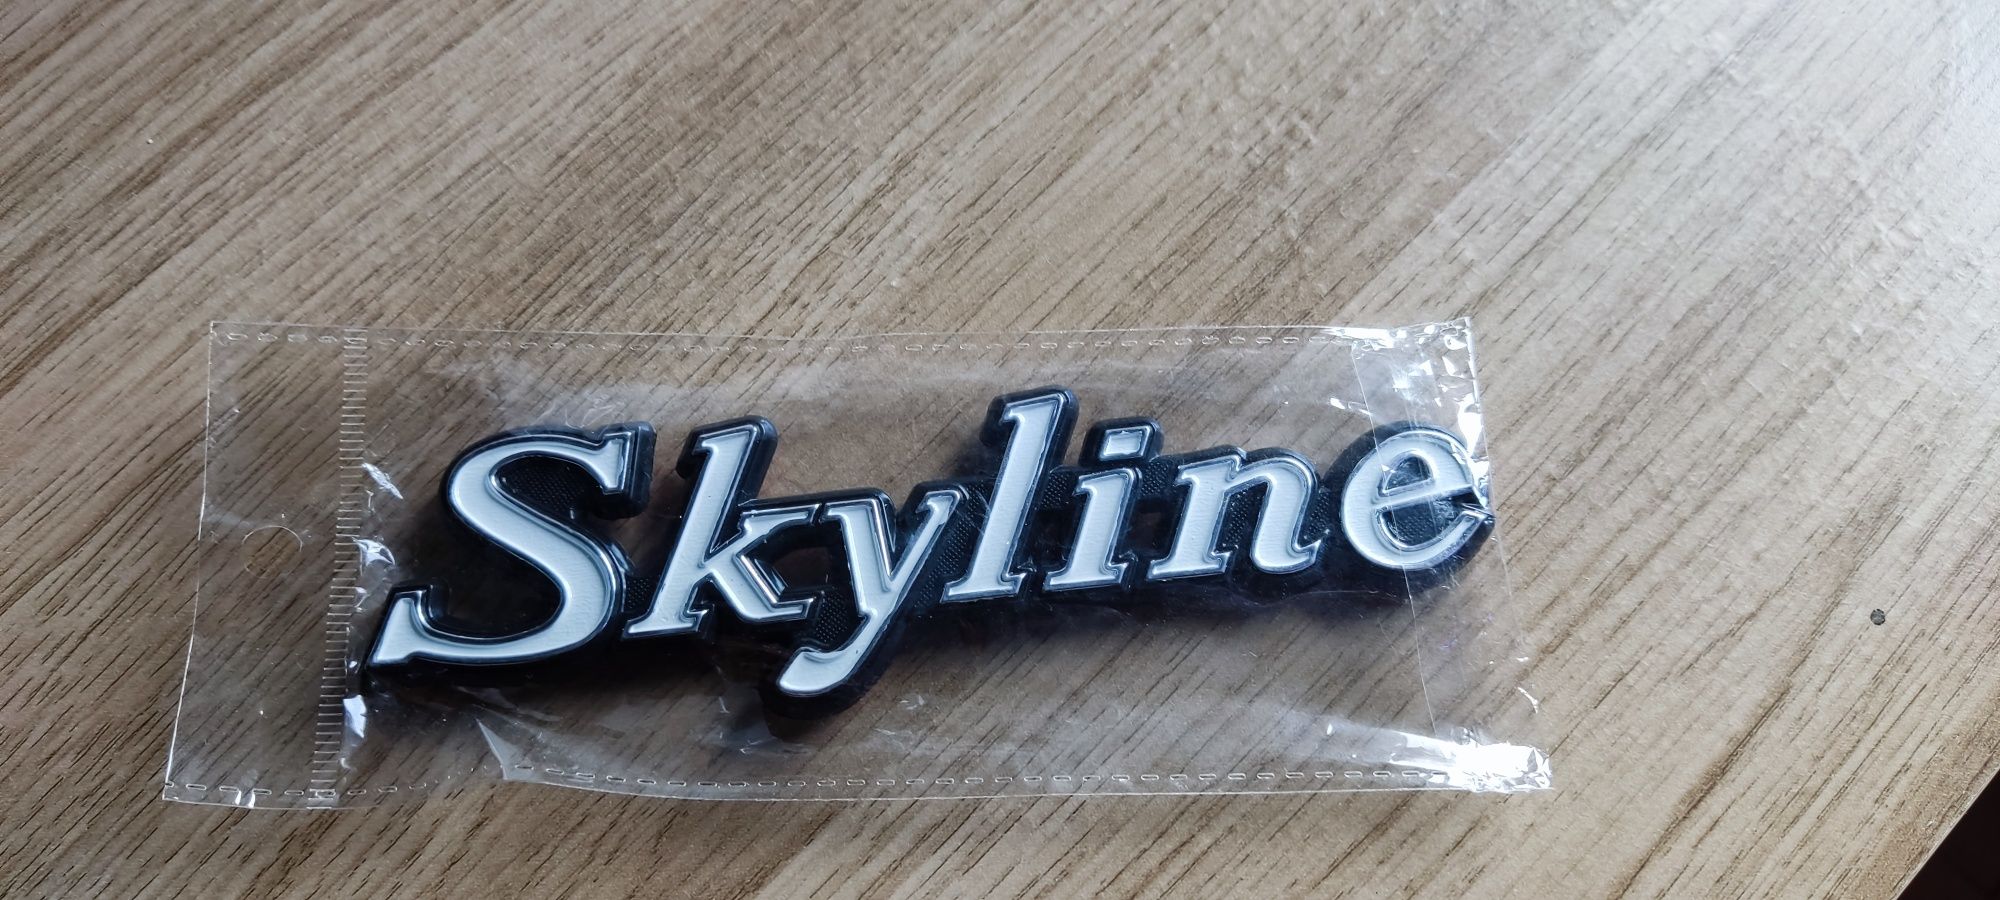 Skyline emblema lateral traseiro